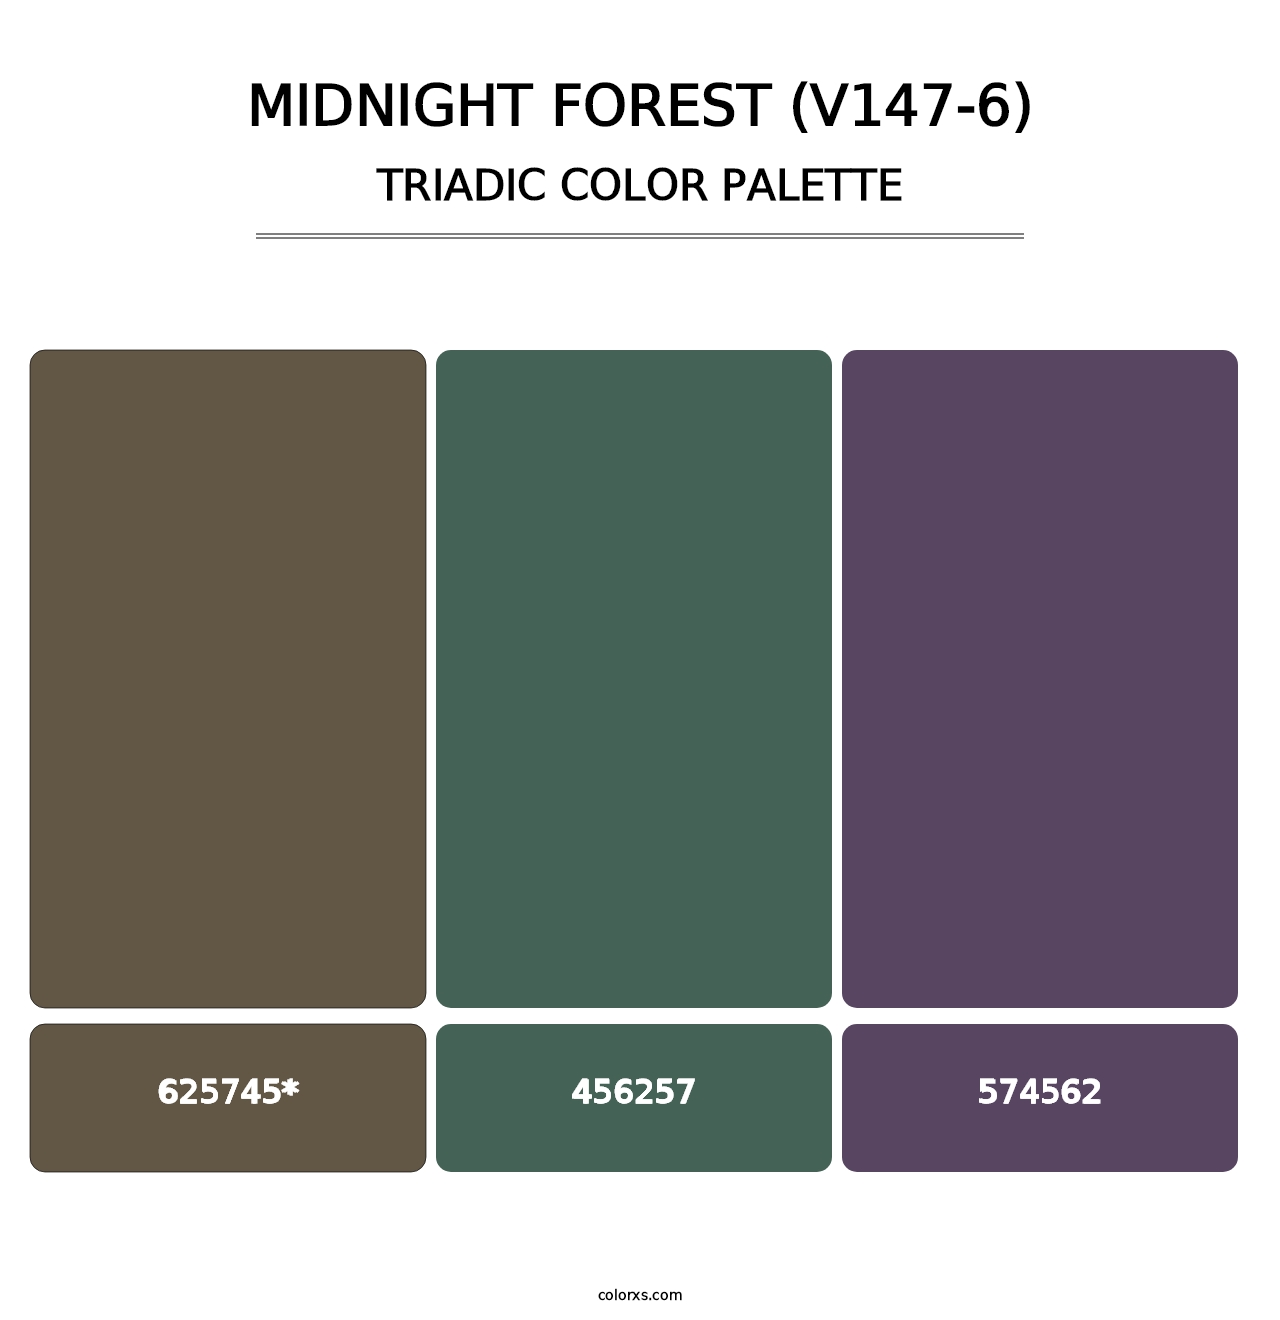 Midnight Forest (V147-6) - Triadic Color Palette